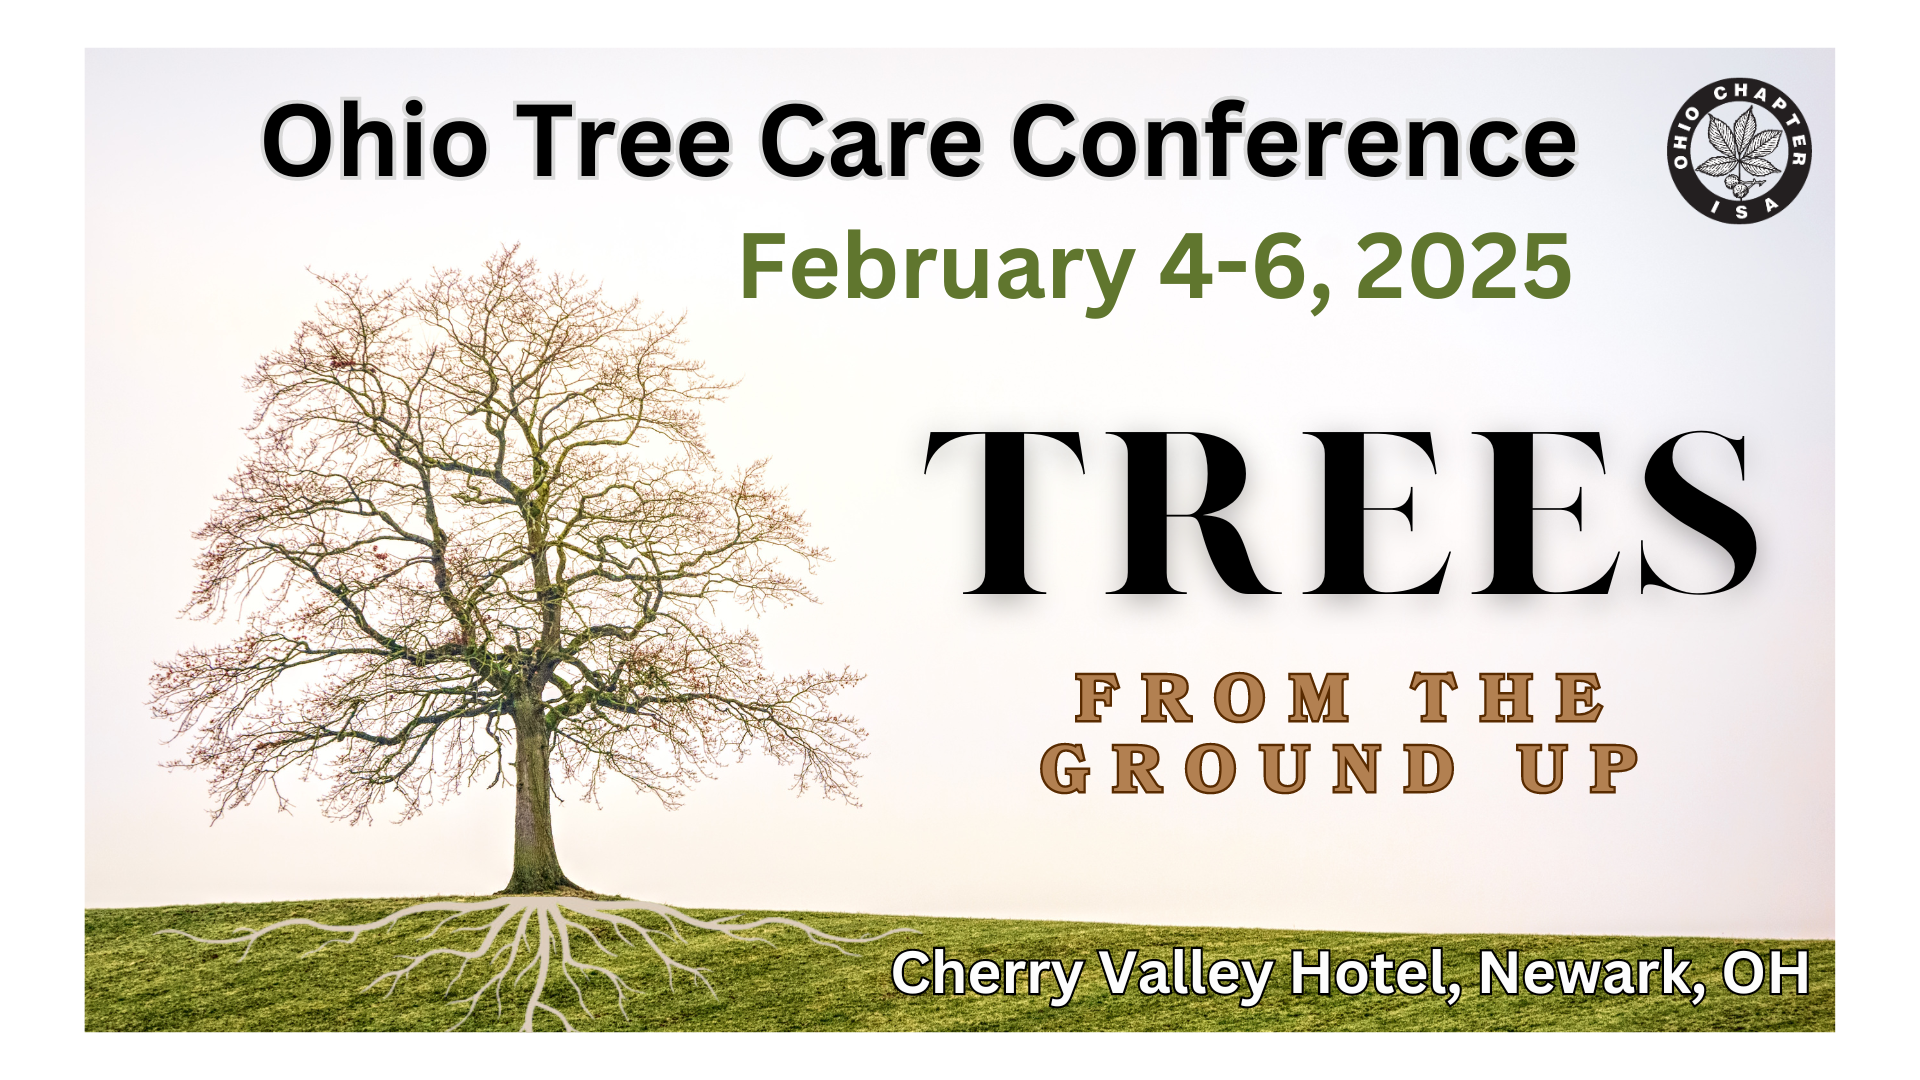 Ohio Tree Care Conference